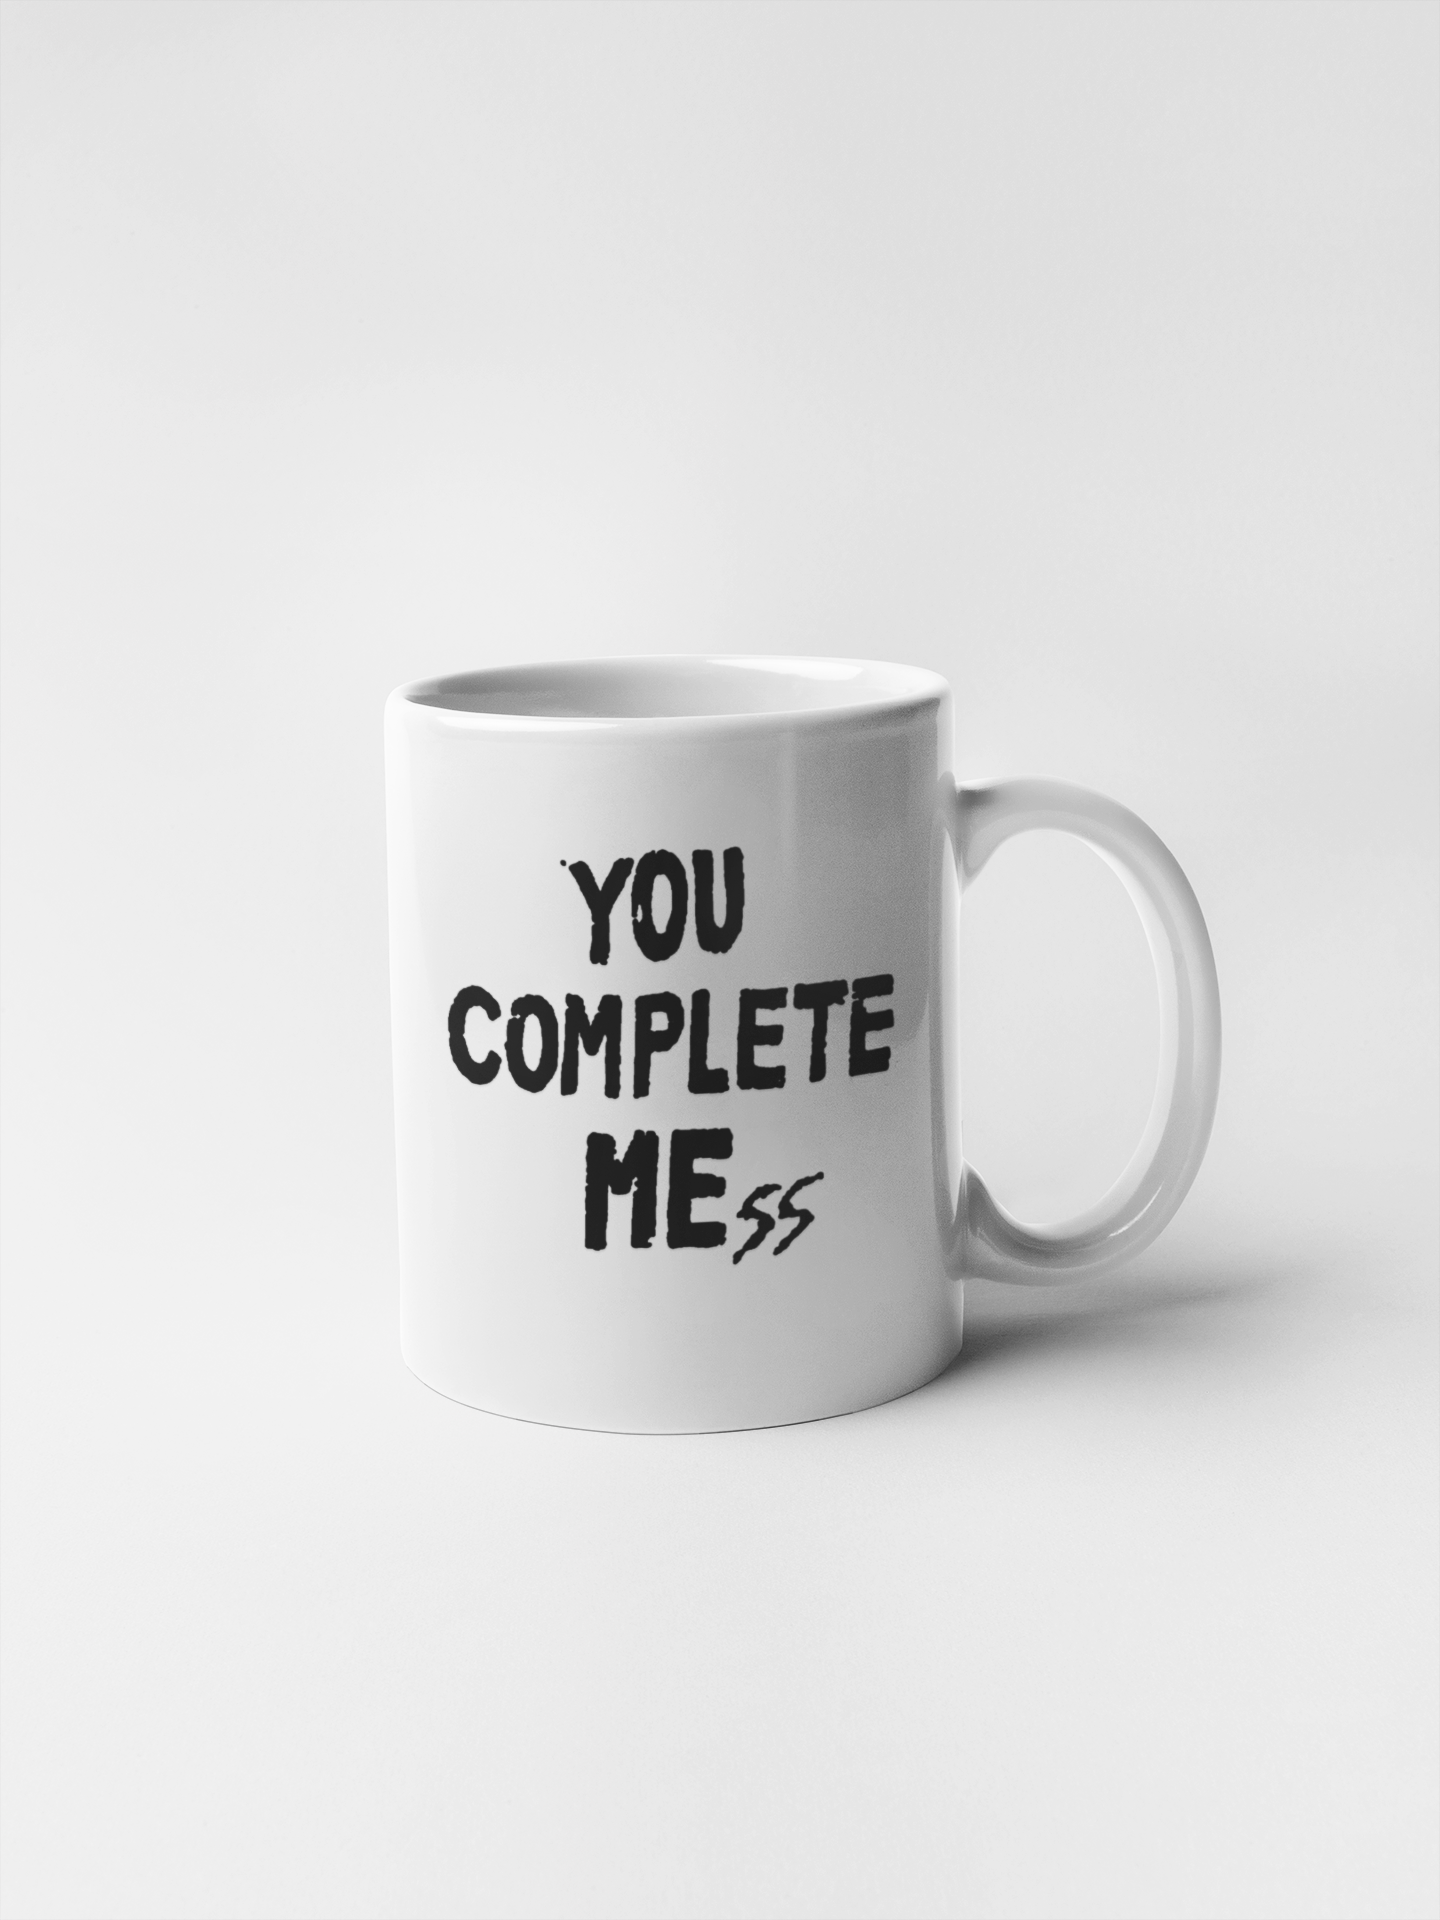 You Complete Me ss Ceramic Coffee Mugs